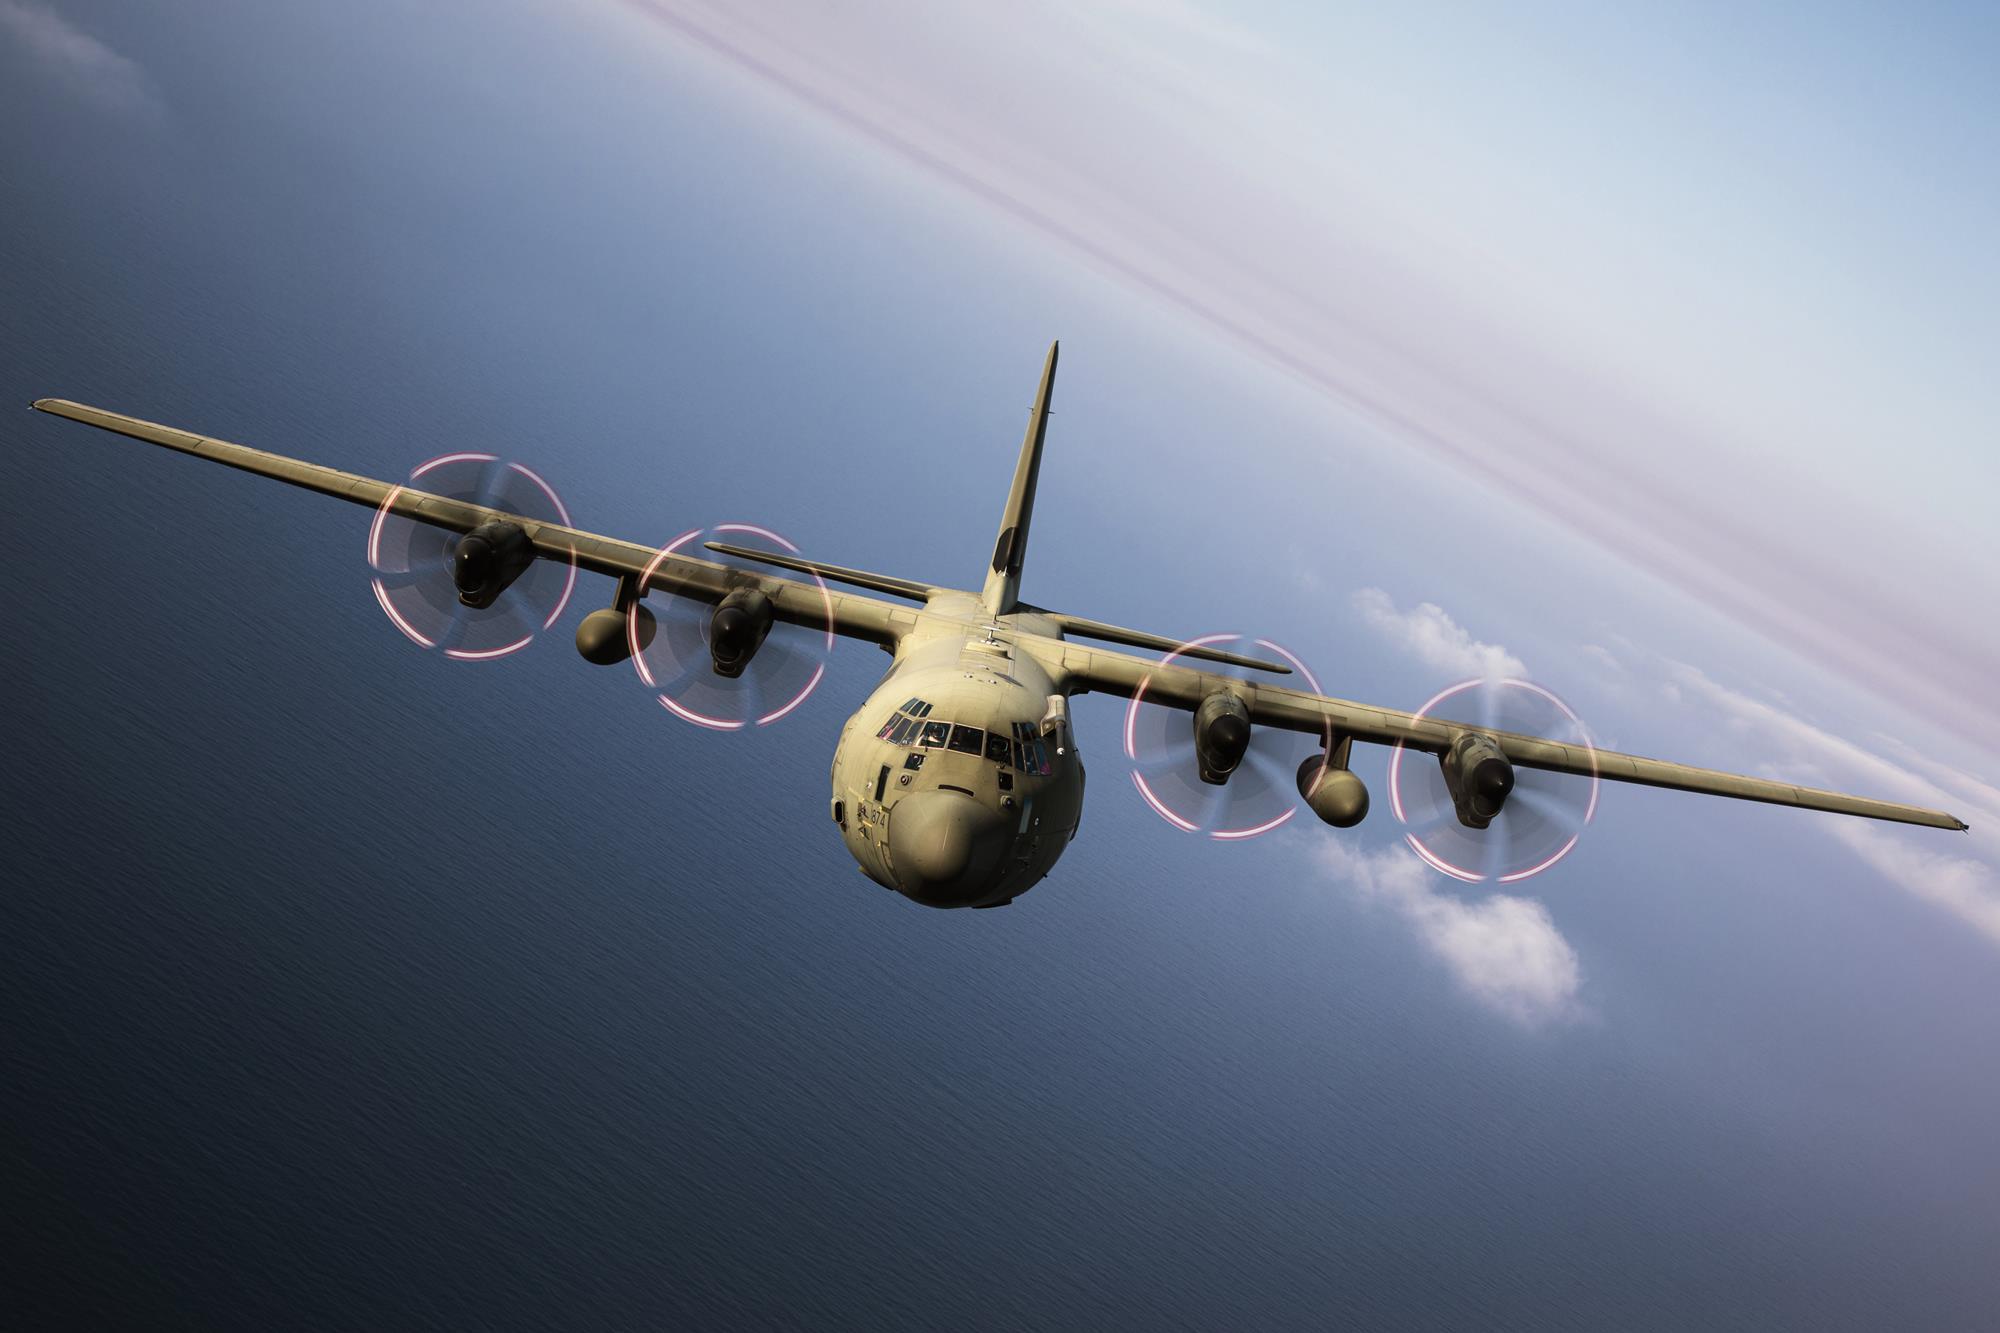 Final RAF C-130J mission set for 17 June as Hercules retirement nears, News